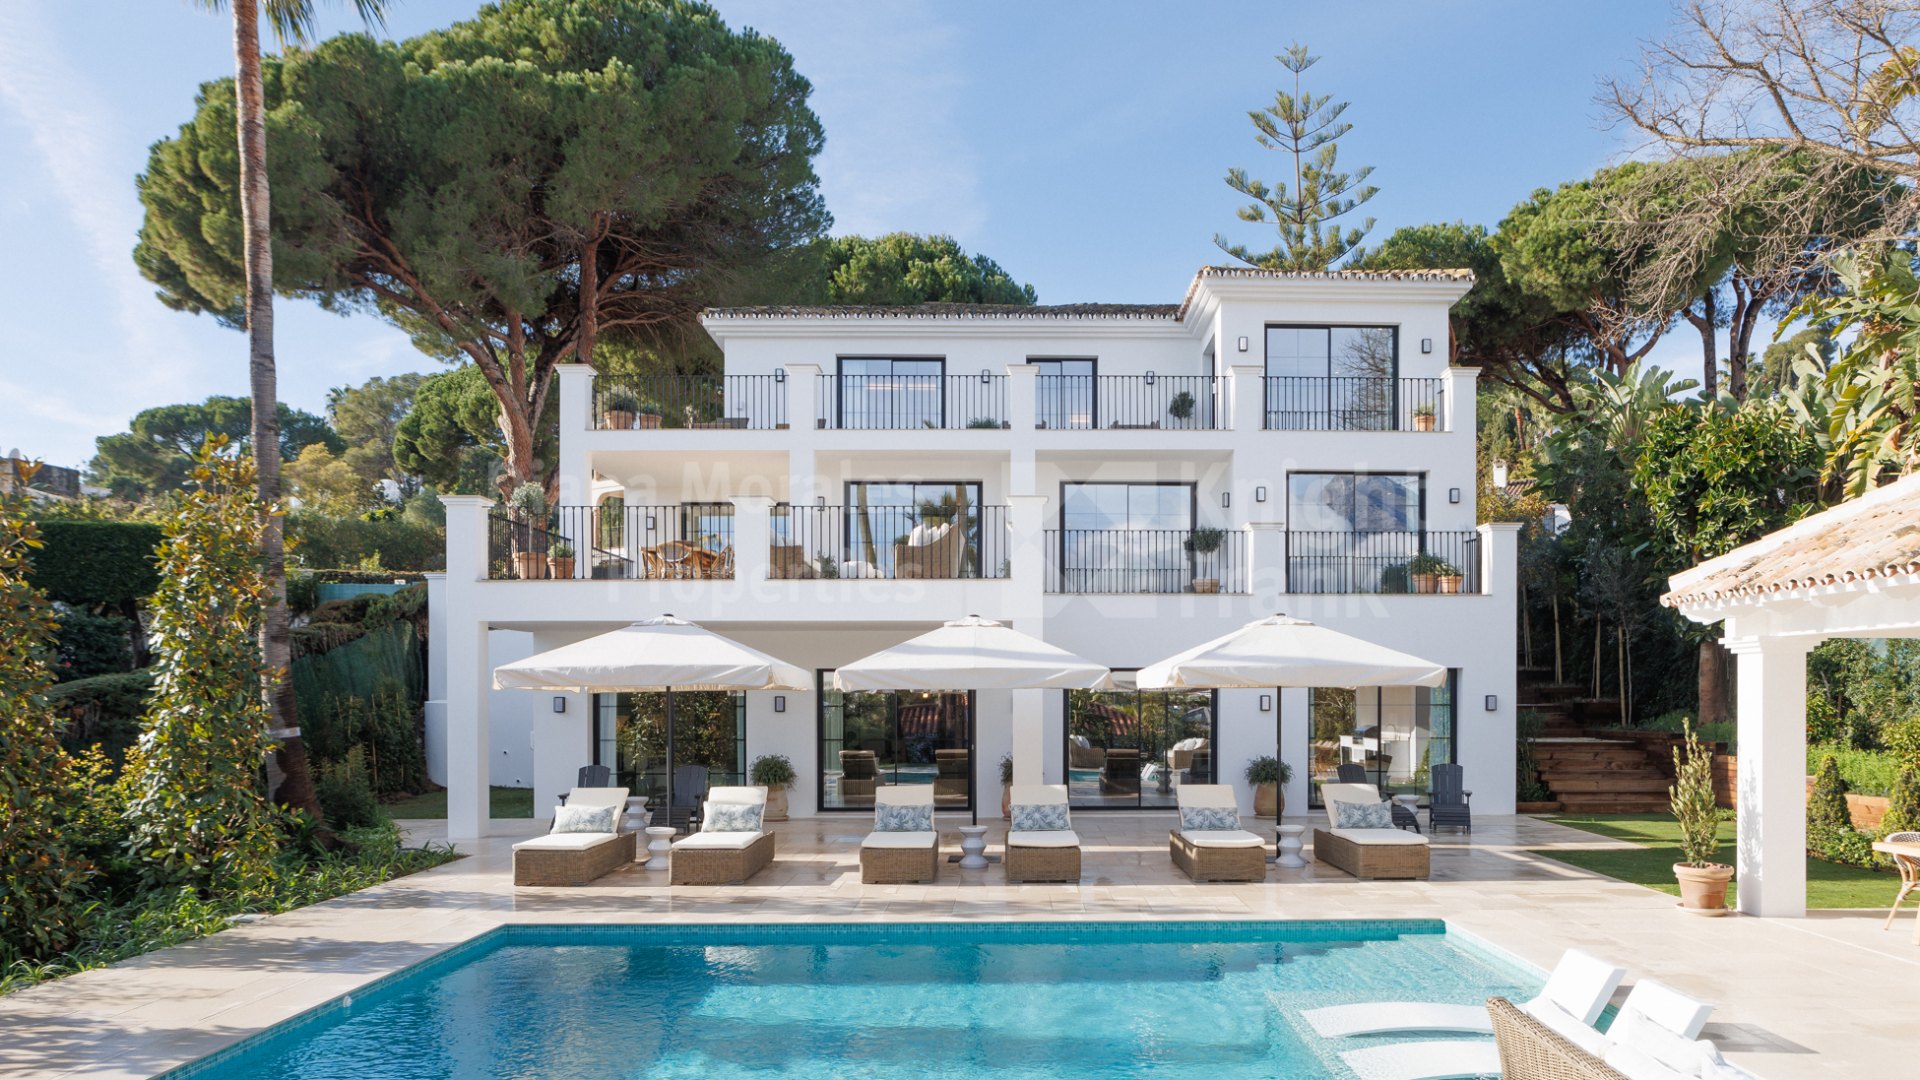 Las Brisas, Villa de luxe de style andalou avec vue imprenable